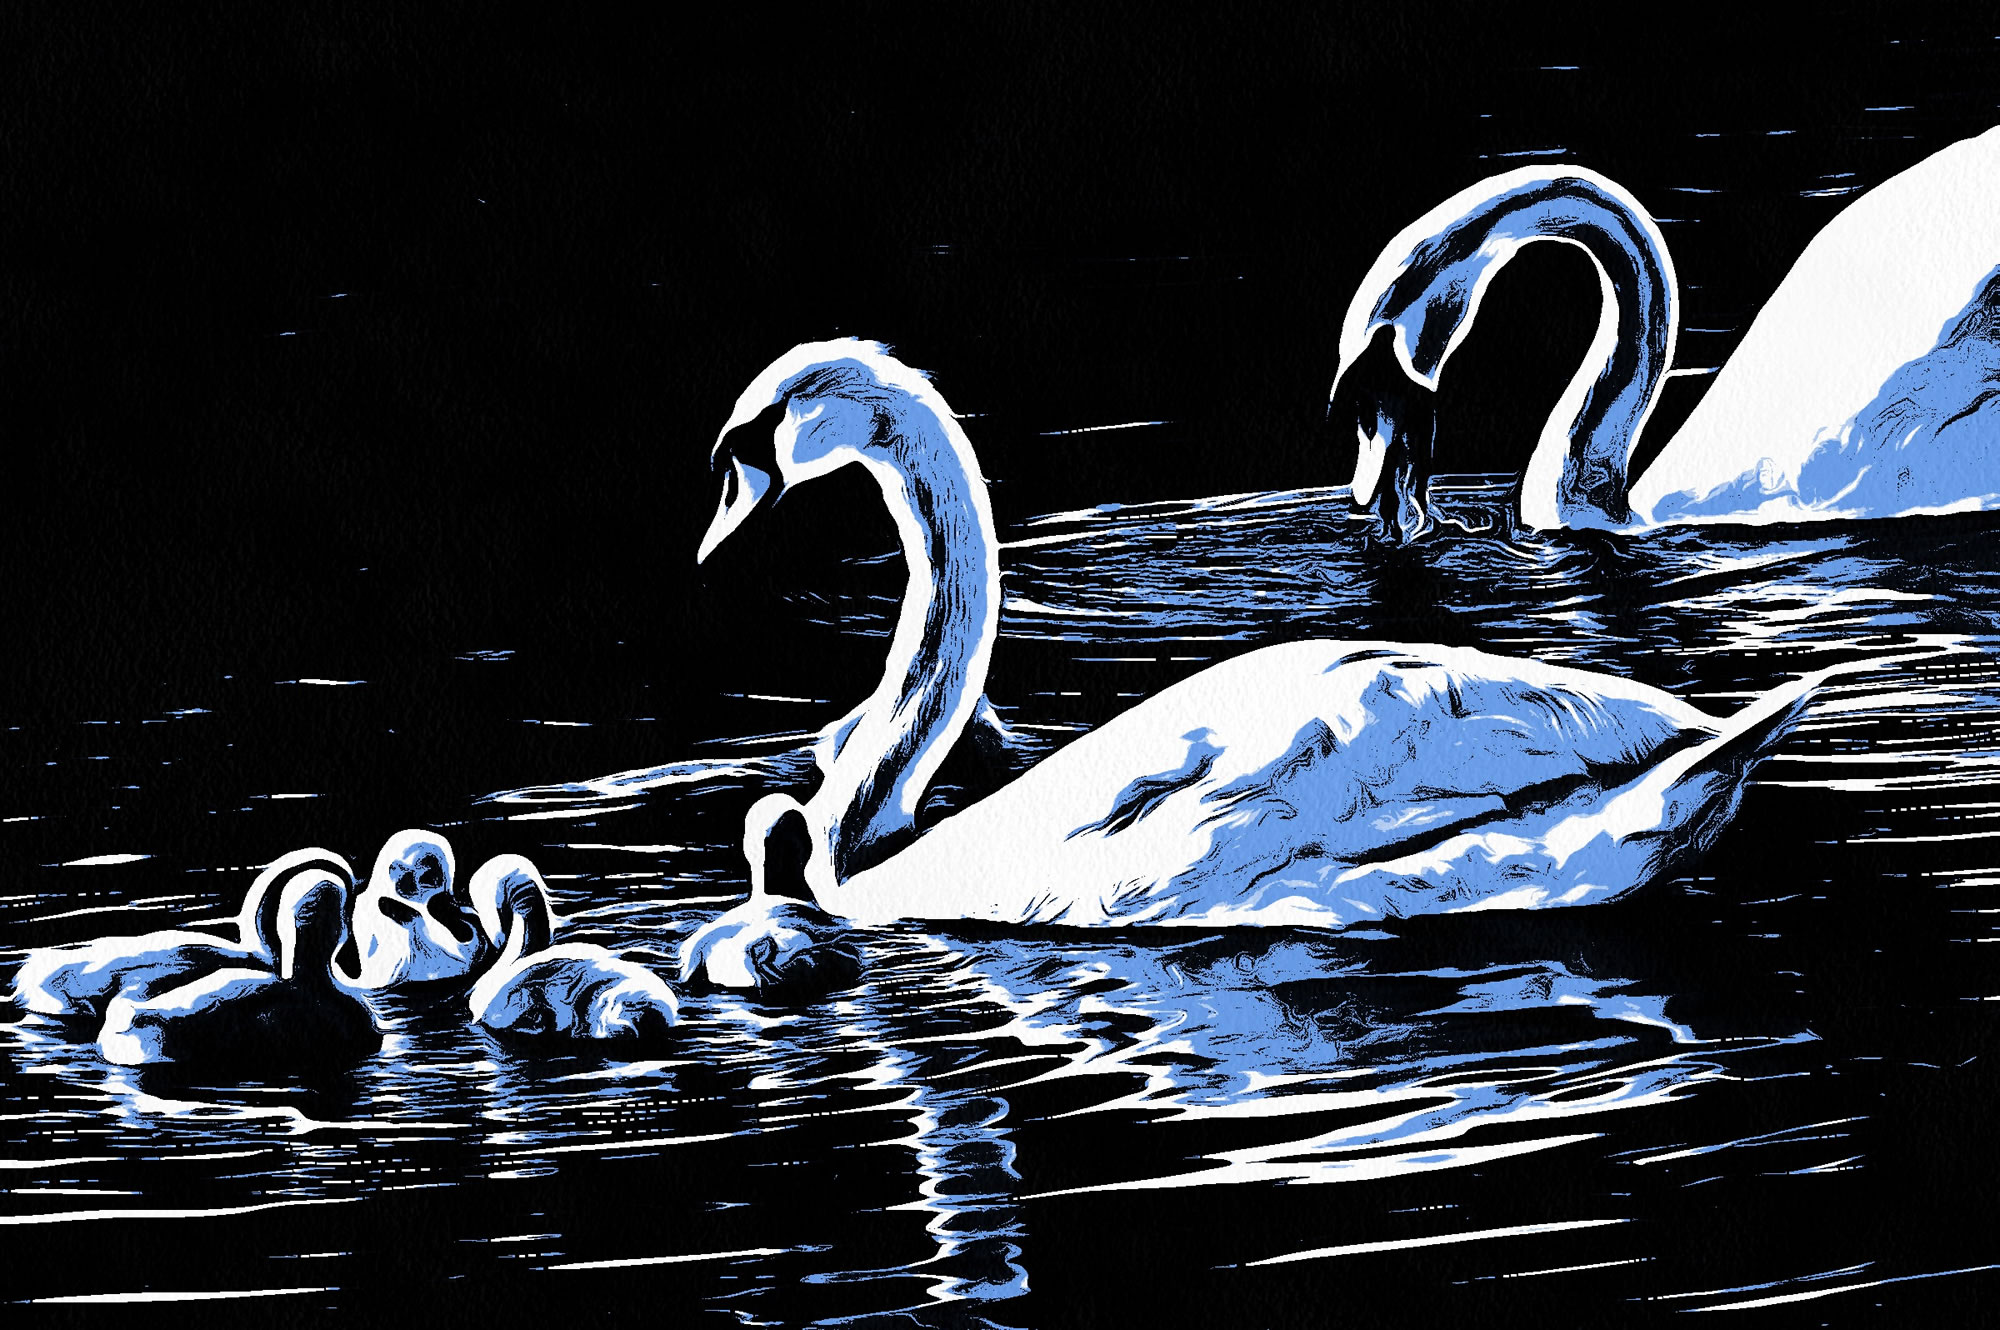 Swan art picture 60 - art image 7